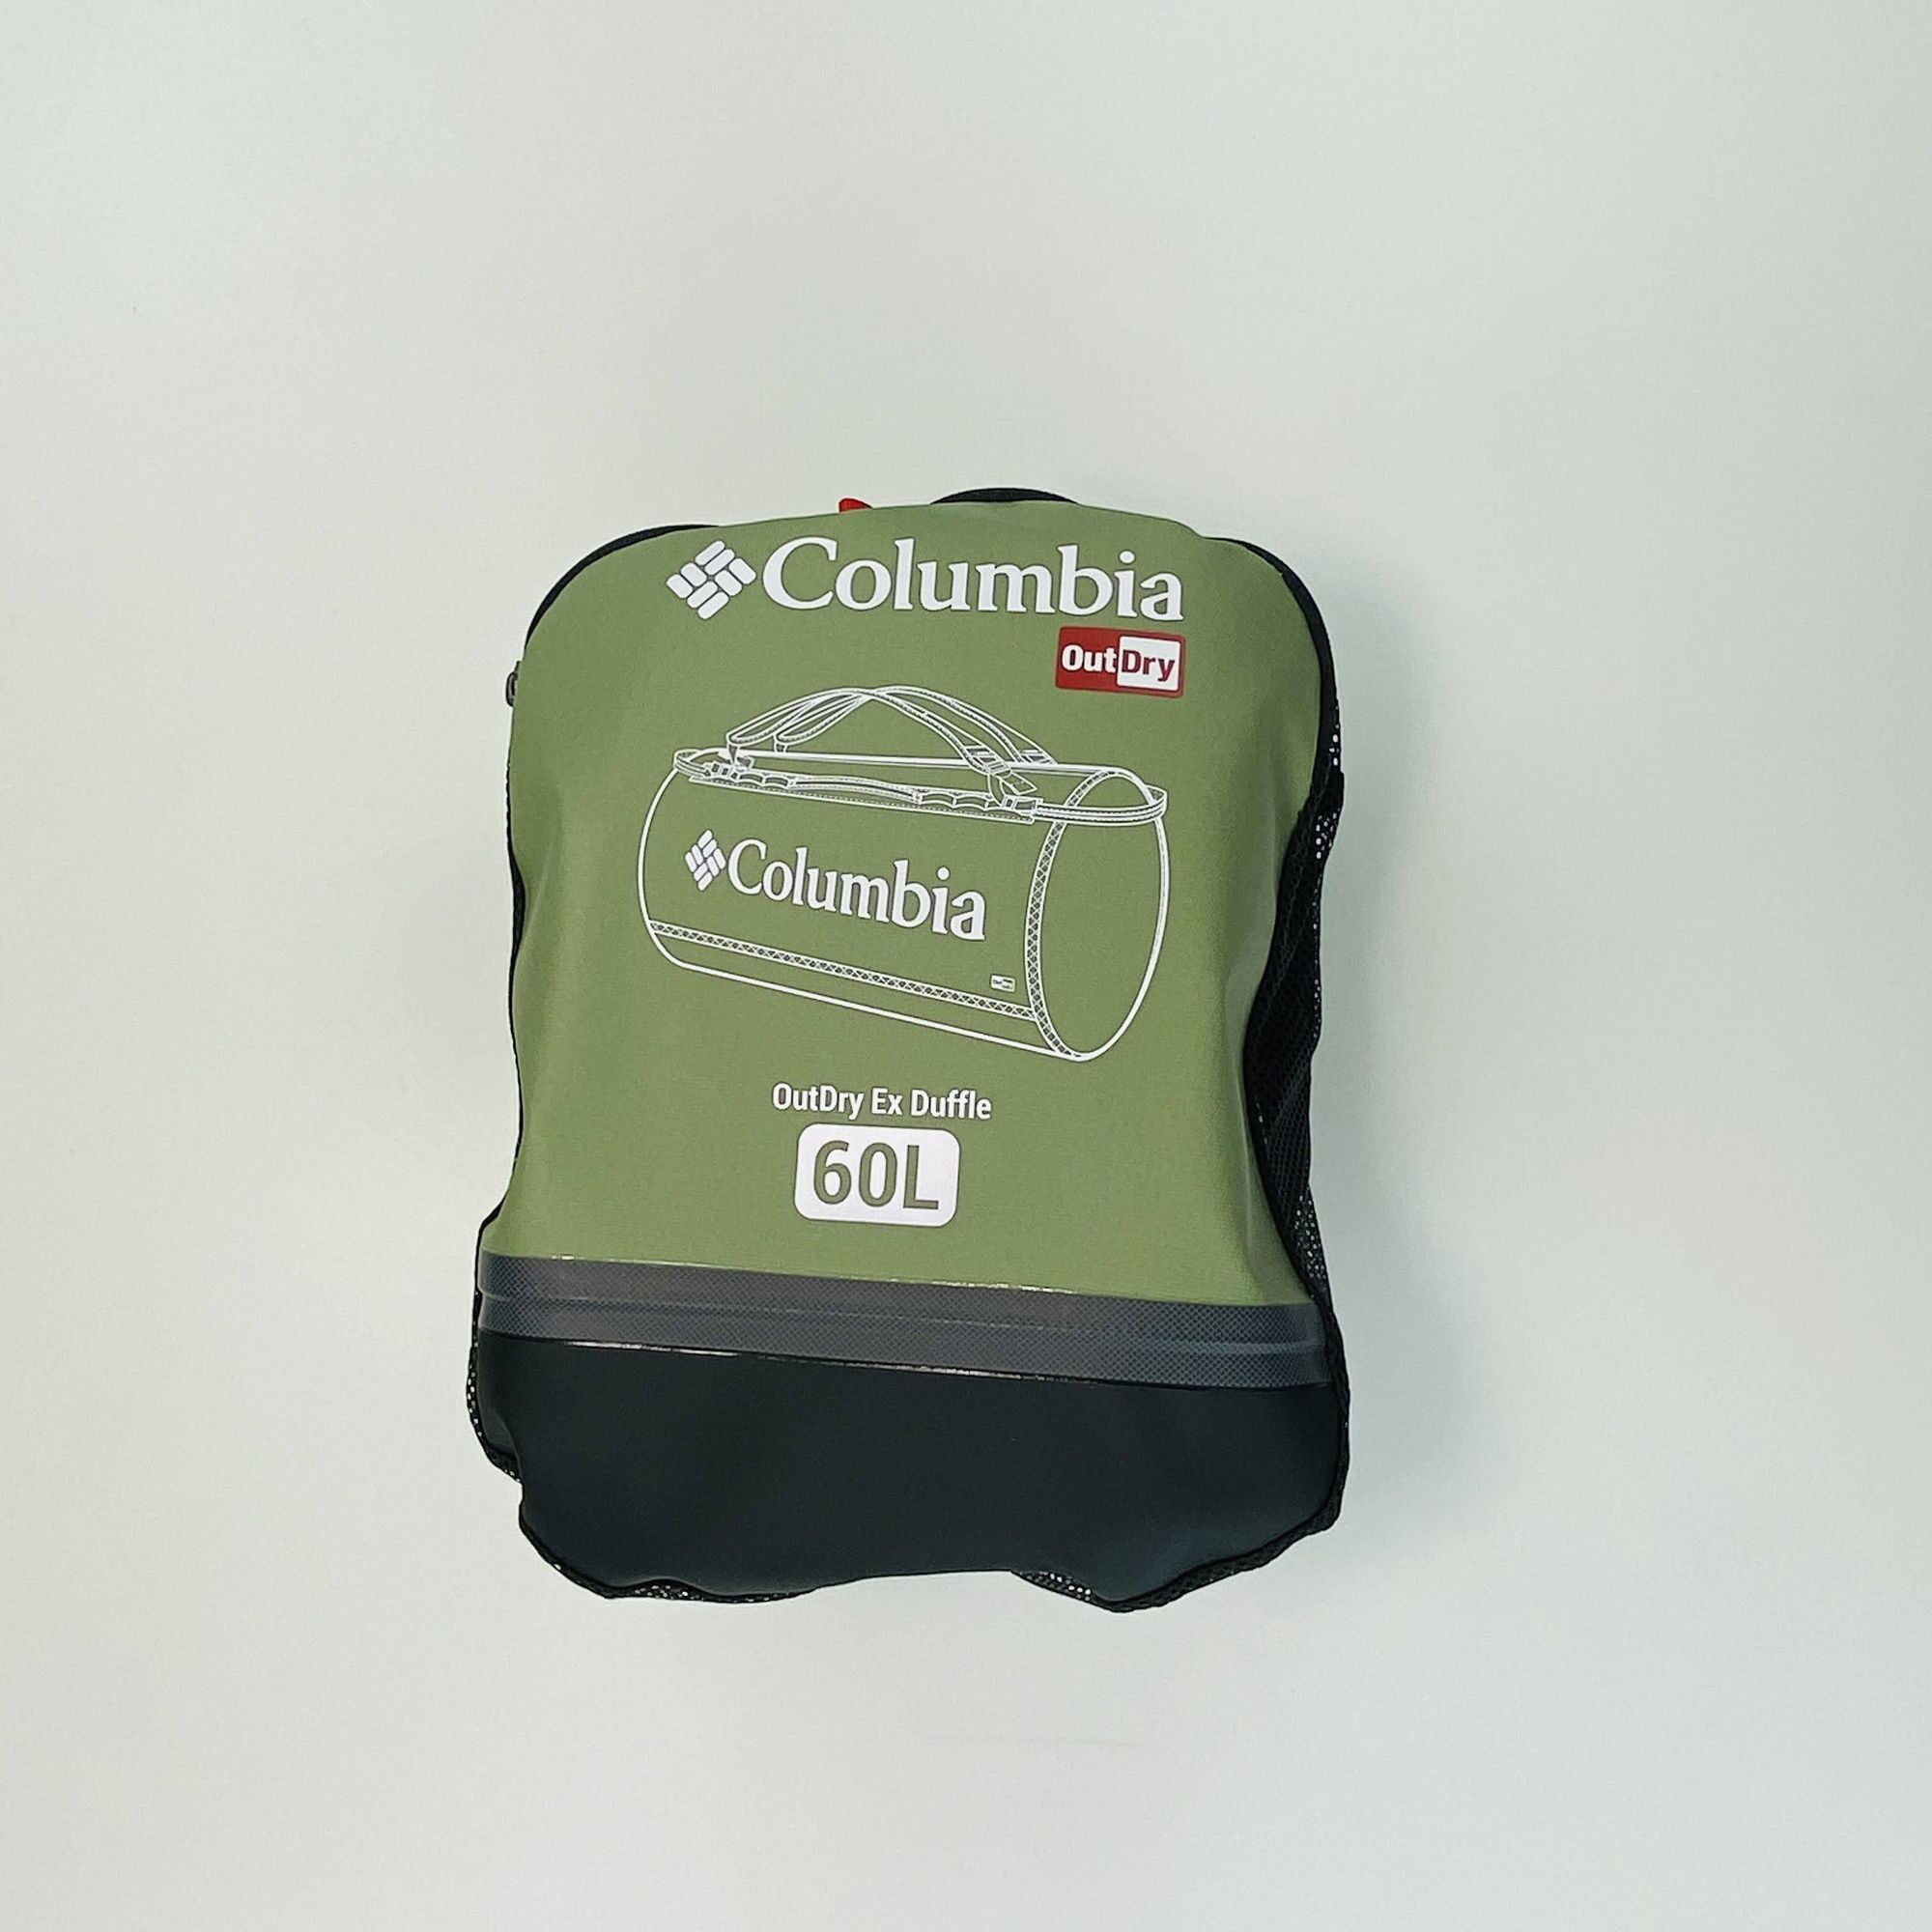 Columbia OutDry Ex™ 60L Duffle - Duffel di seconda mano - Verde oliva - Taglia unica | Hardloop